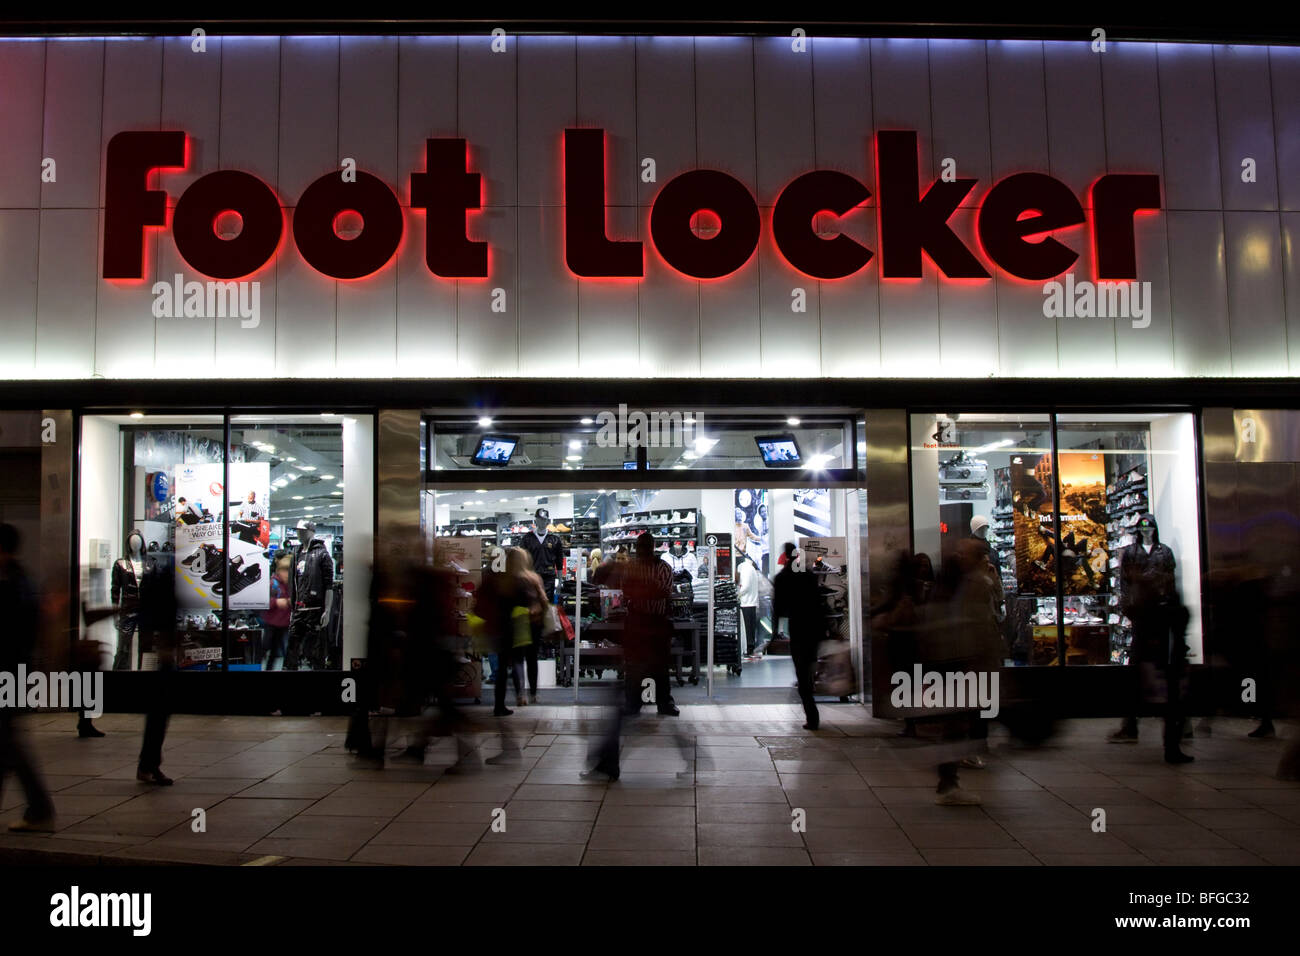 Foot Locker Chaussures de sport Store - Oxford Street - Londres Photo Stock  - Alamy